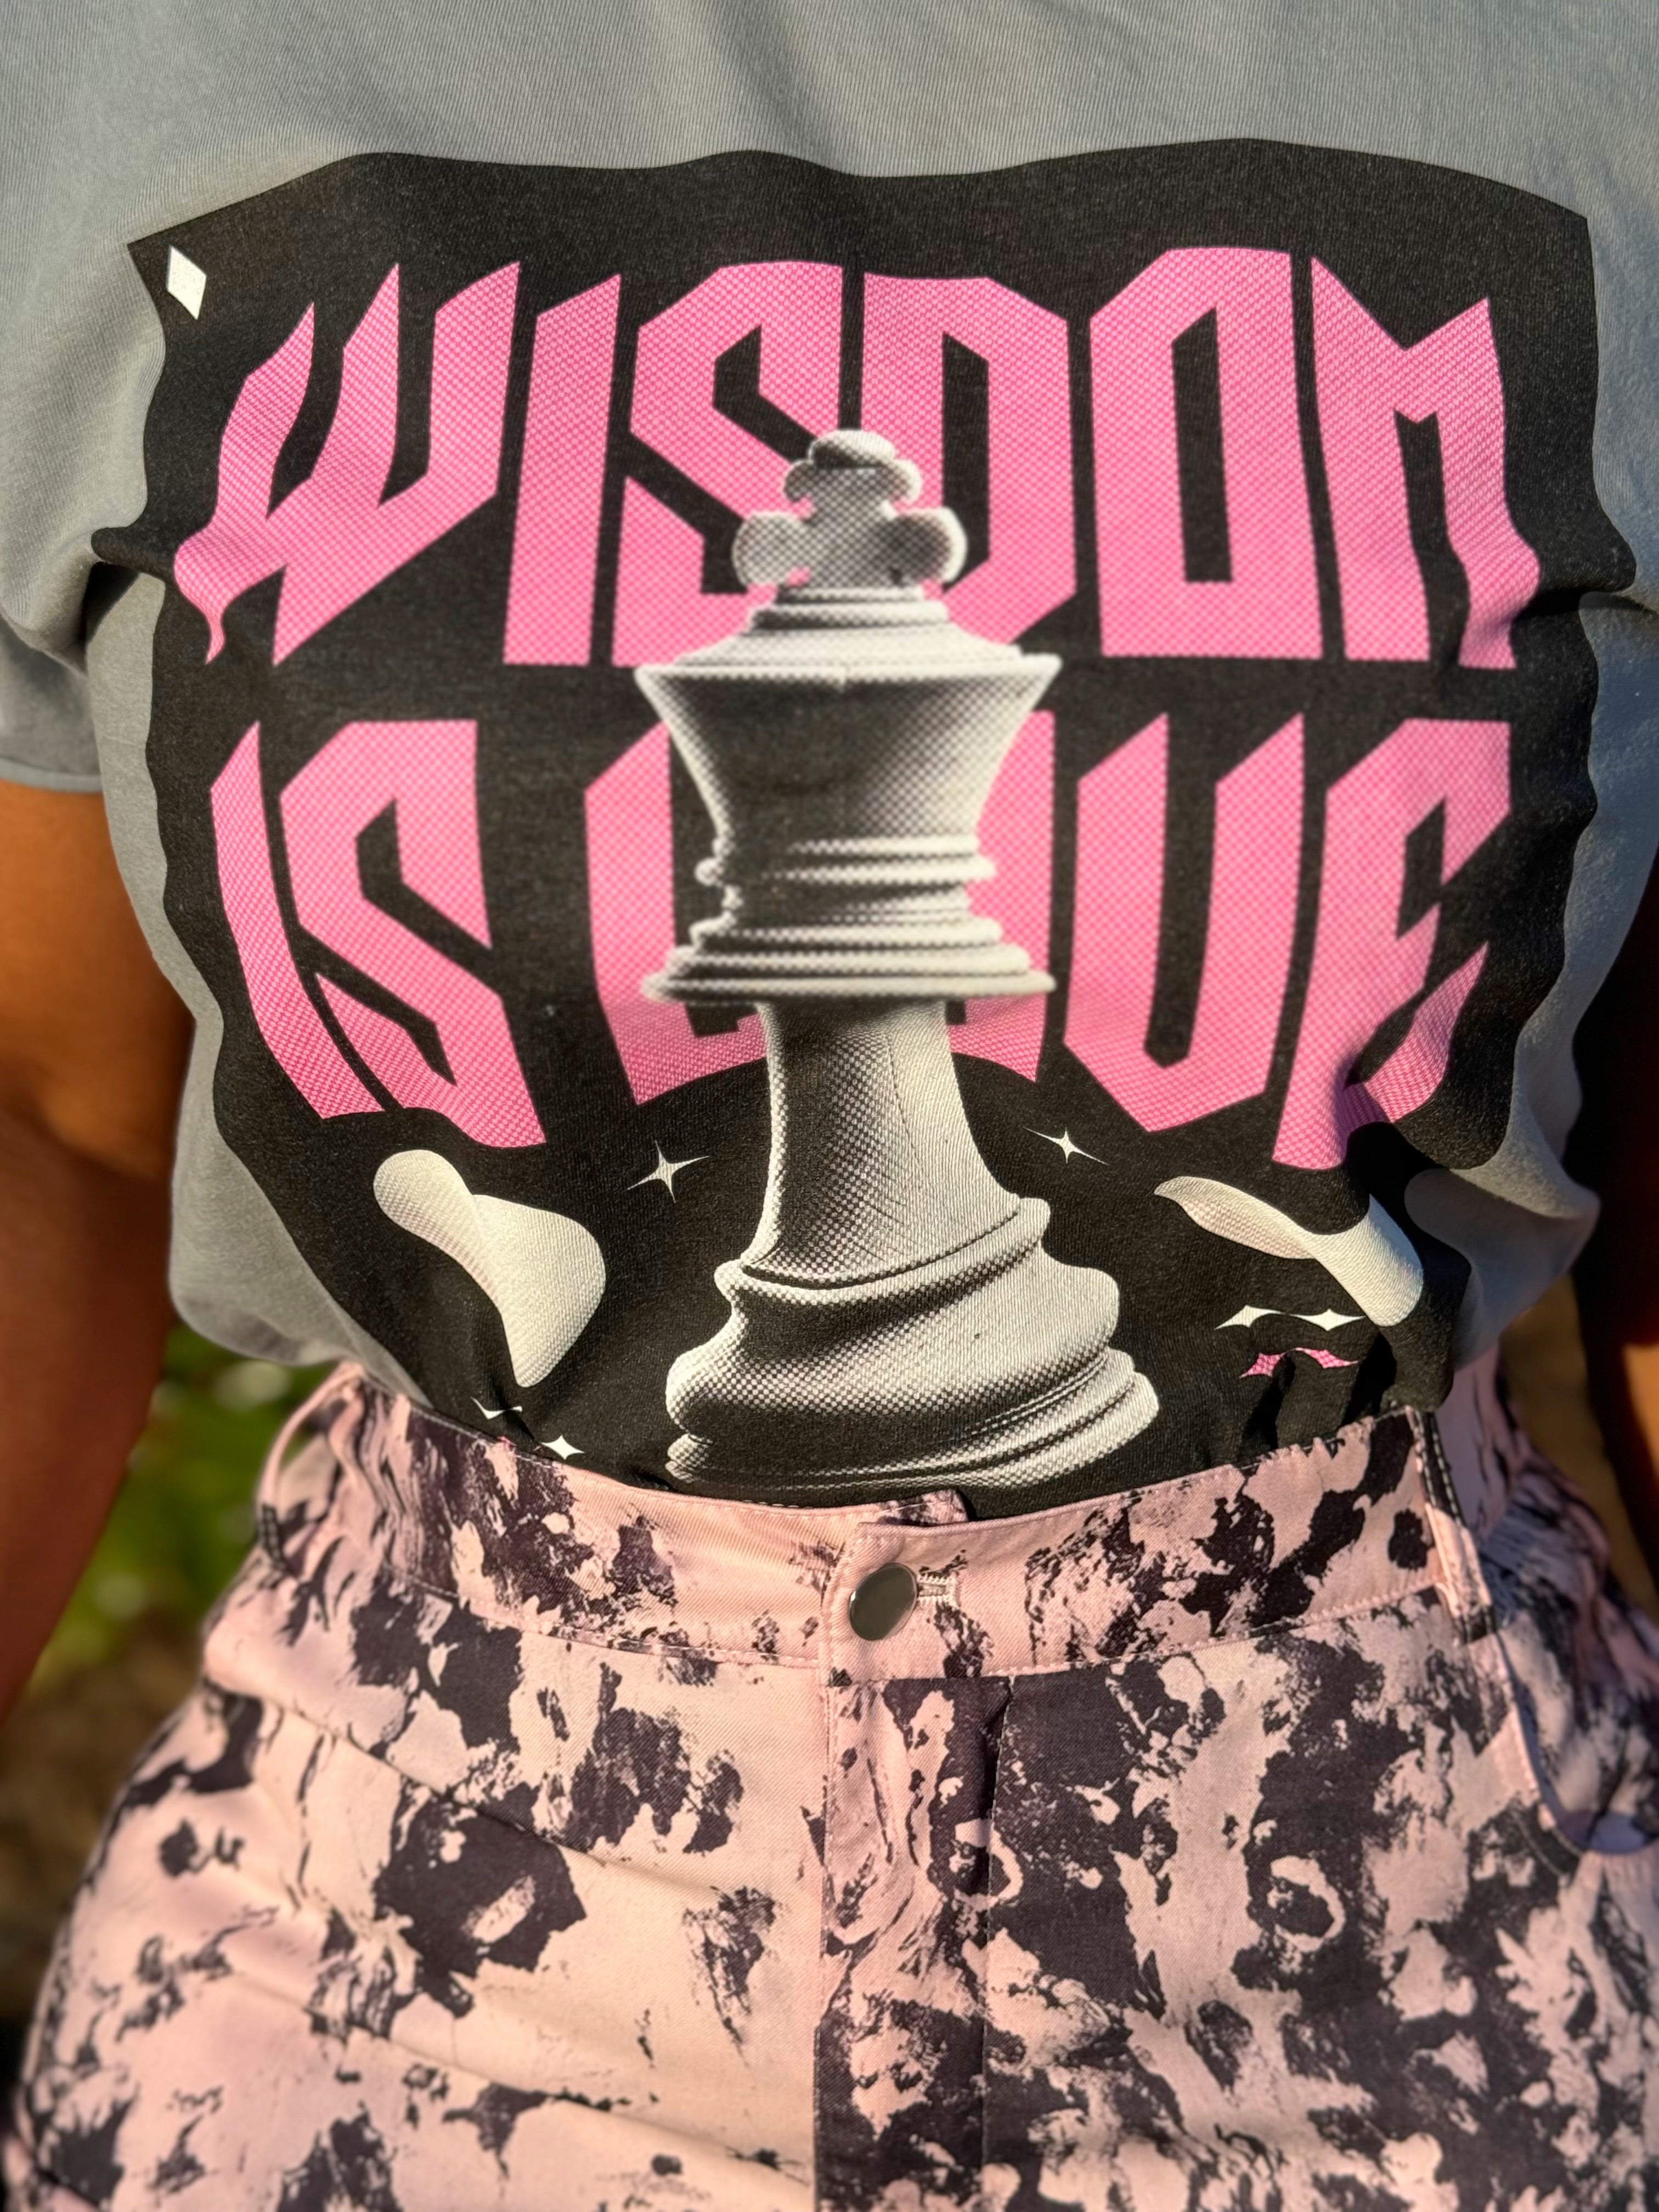 Wisdom Graphic T-shirt